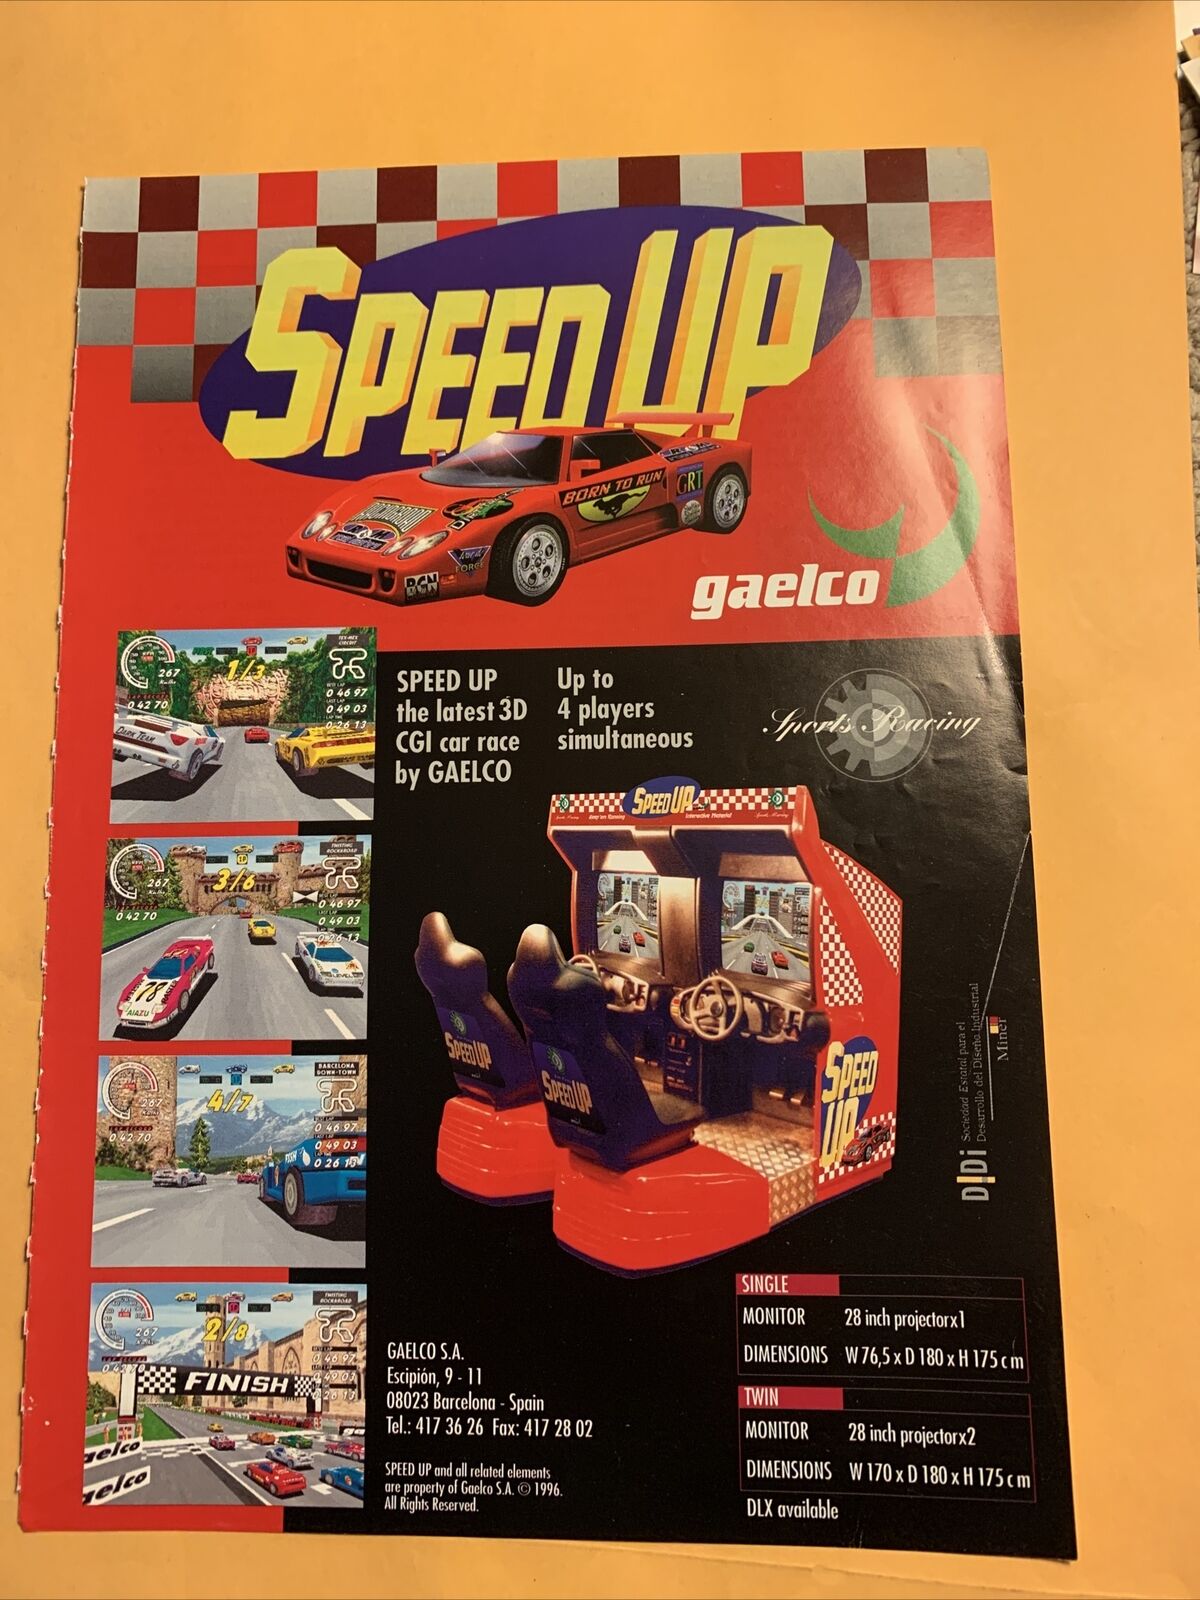 original 11-8 1/4” Speed Up Gaelco ARCADE VIDEO GAME FLYER